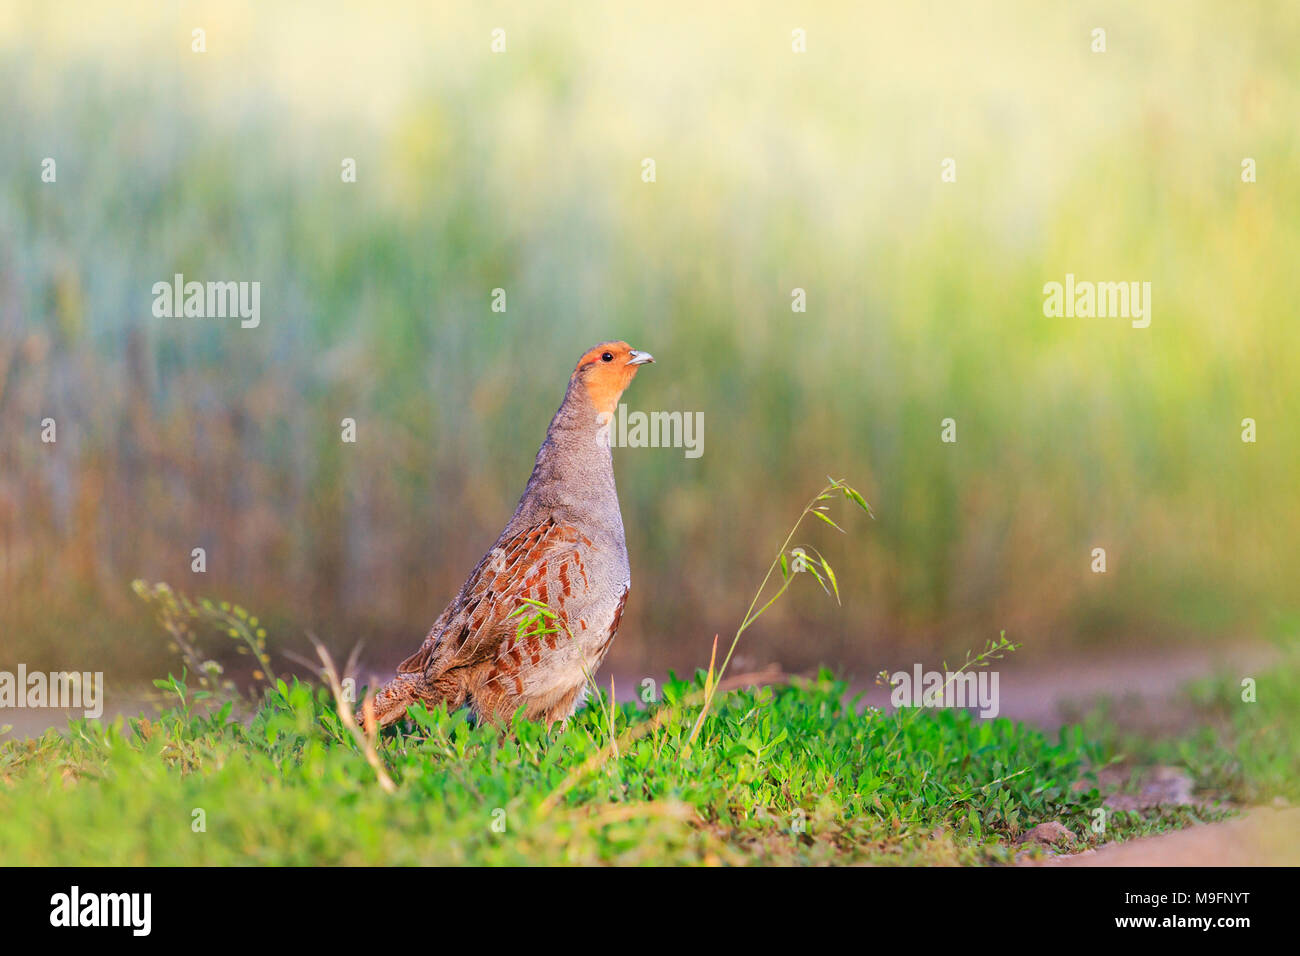 rare wild bird on green grass Stock Photo